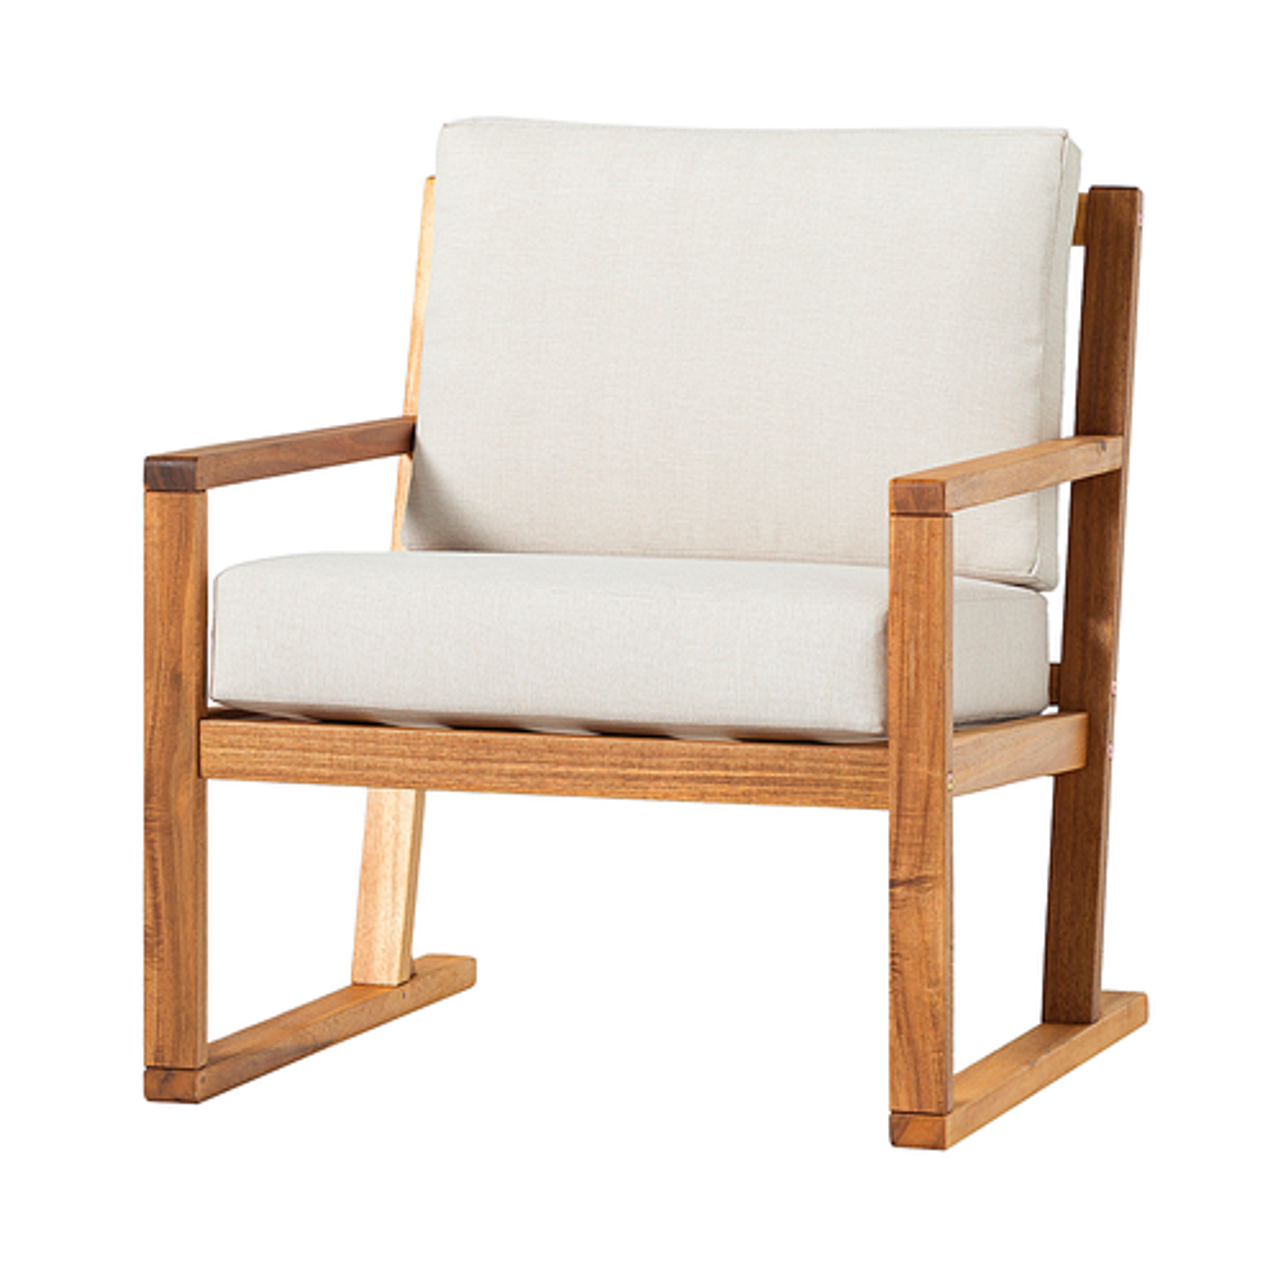 Walker Edison - Modern Solid Wood Slatted Club Chair - Natural